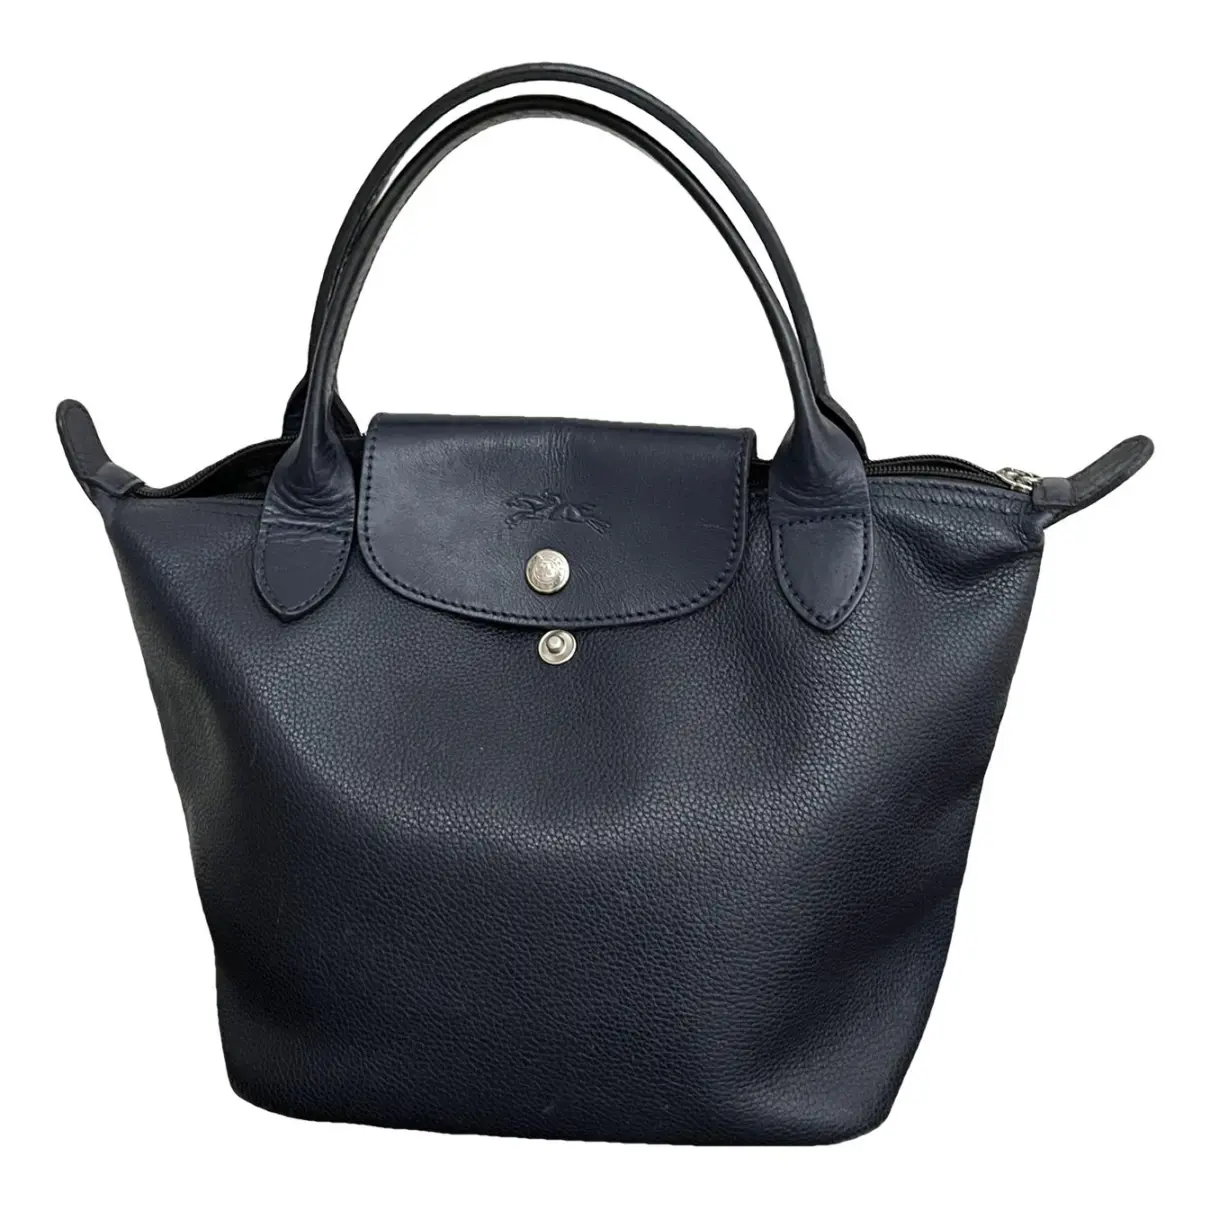 Pliage leather handbag